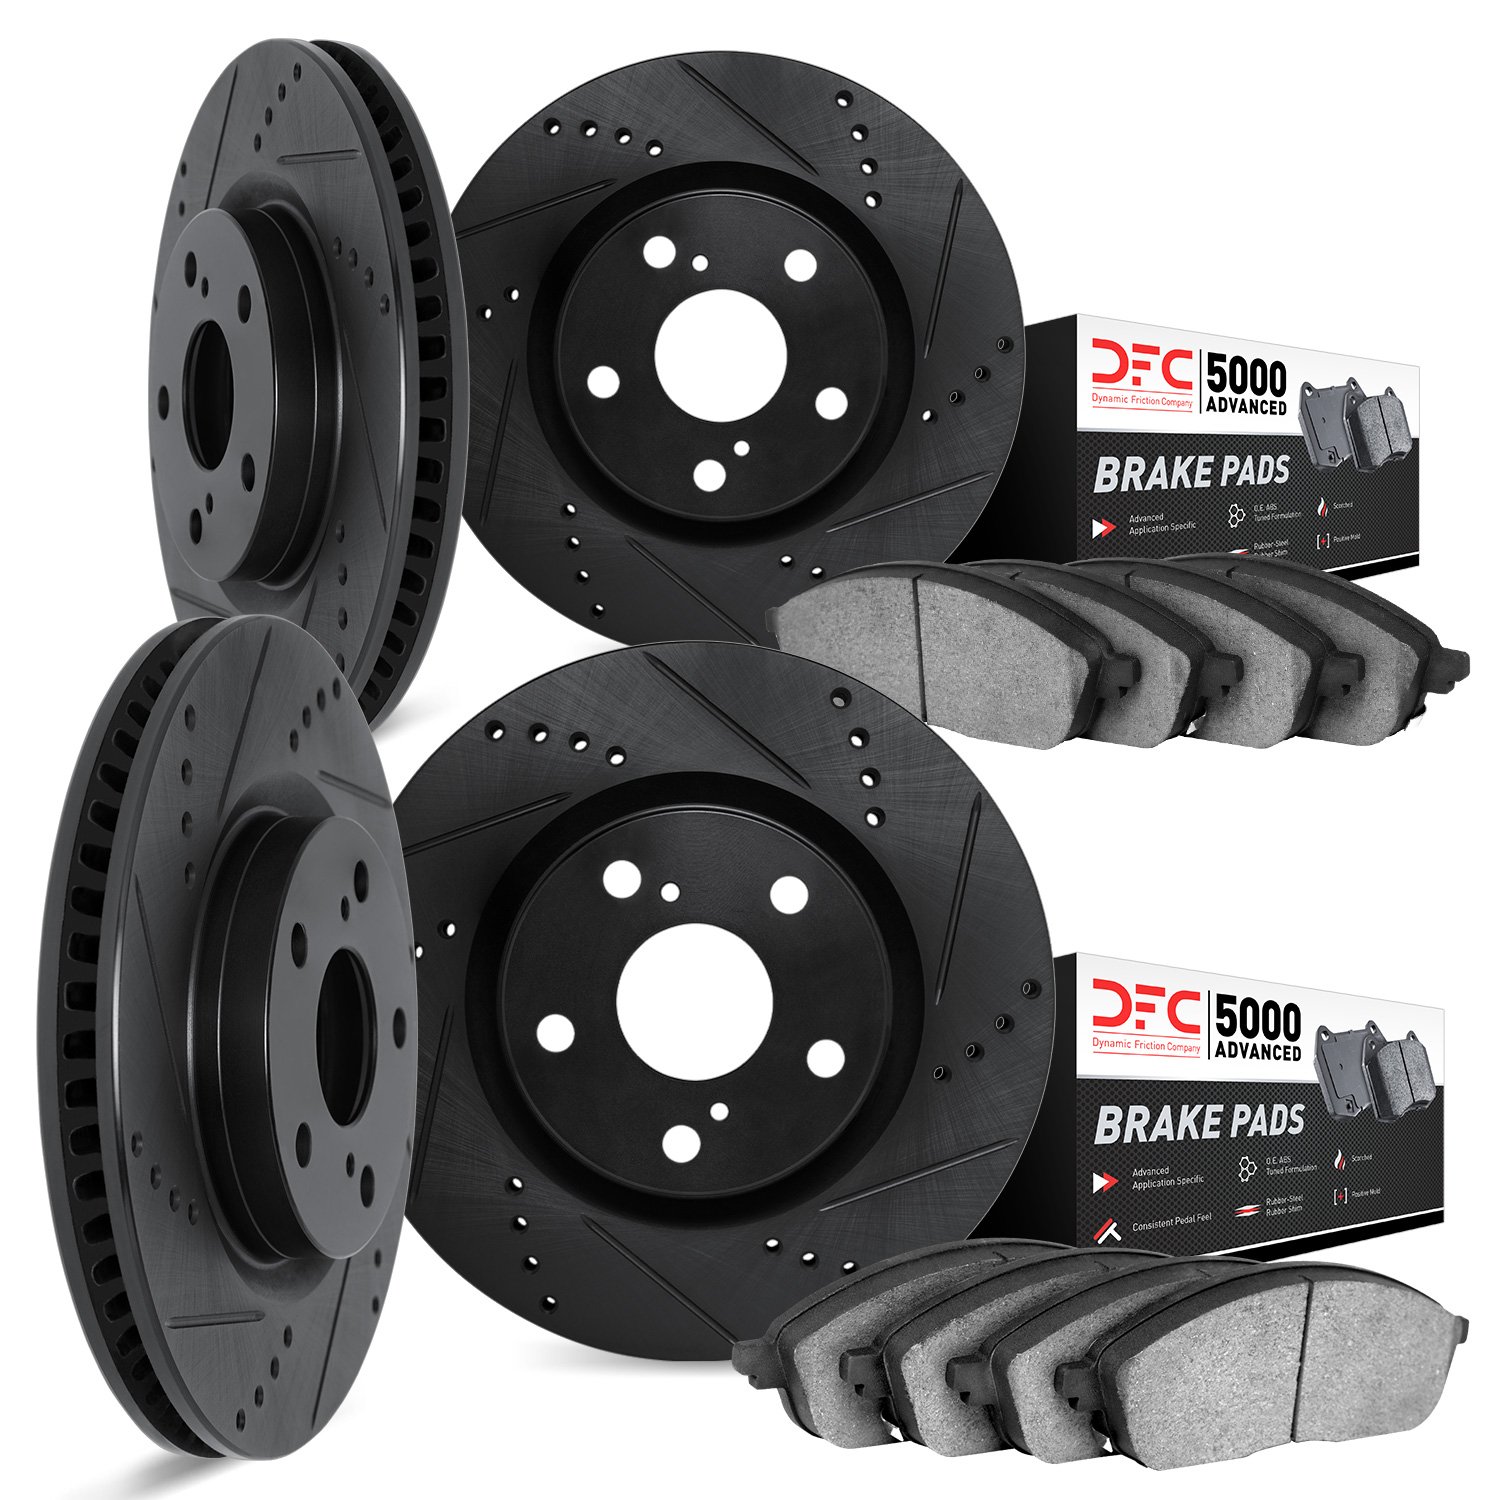 8504-39030 Drilled/Slotted Brake Rotors w/5000 Advanced Brake Pads Kit [Black], 2005-2018 Mopar, Position: Front and Rear